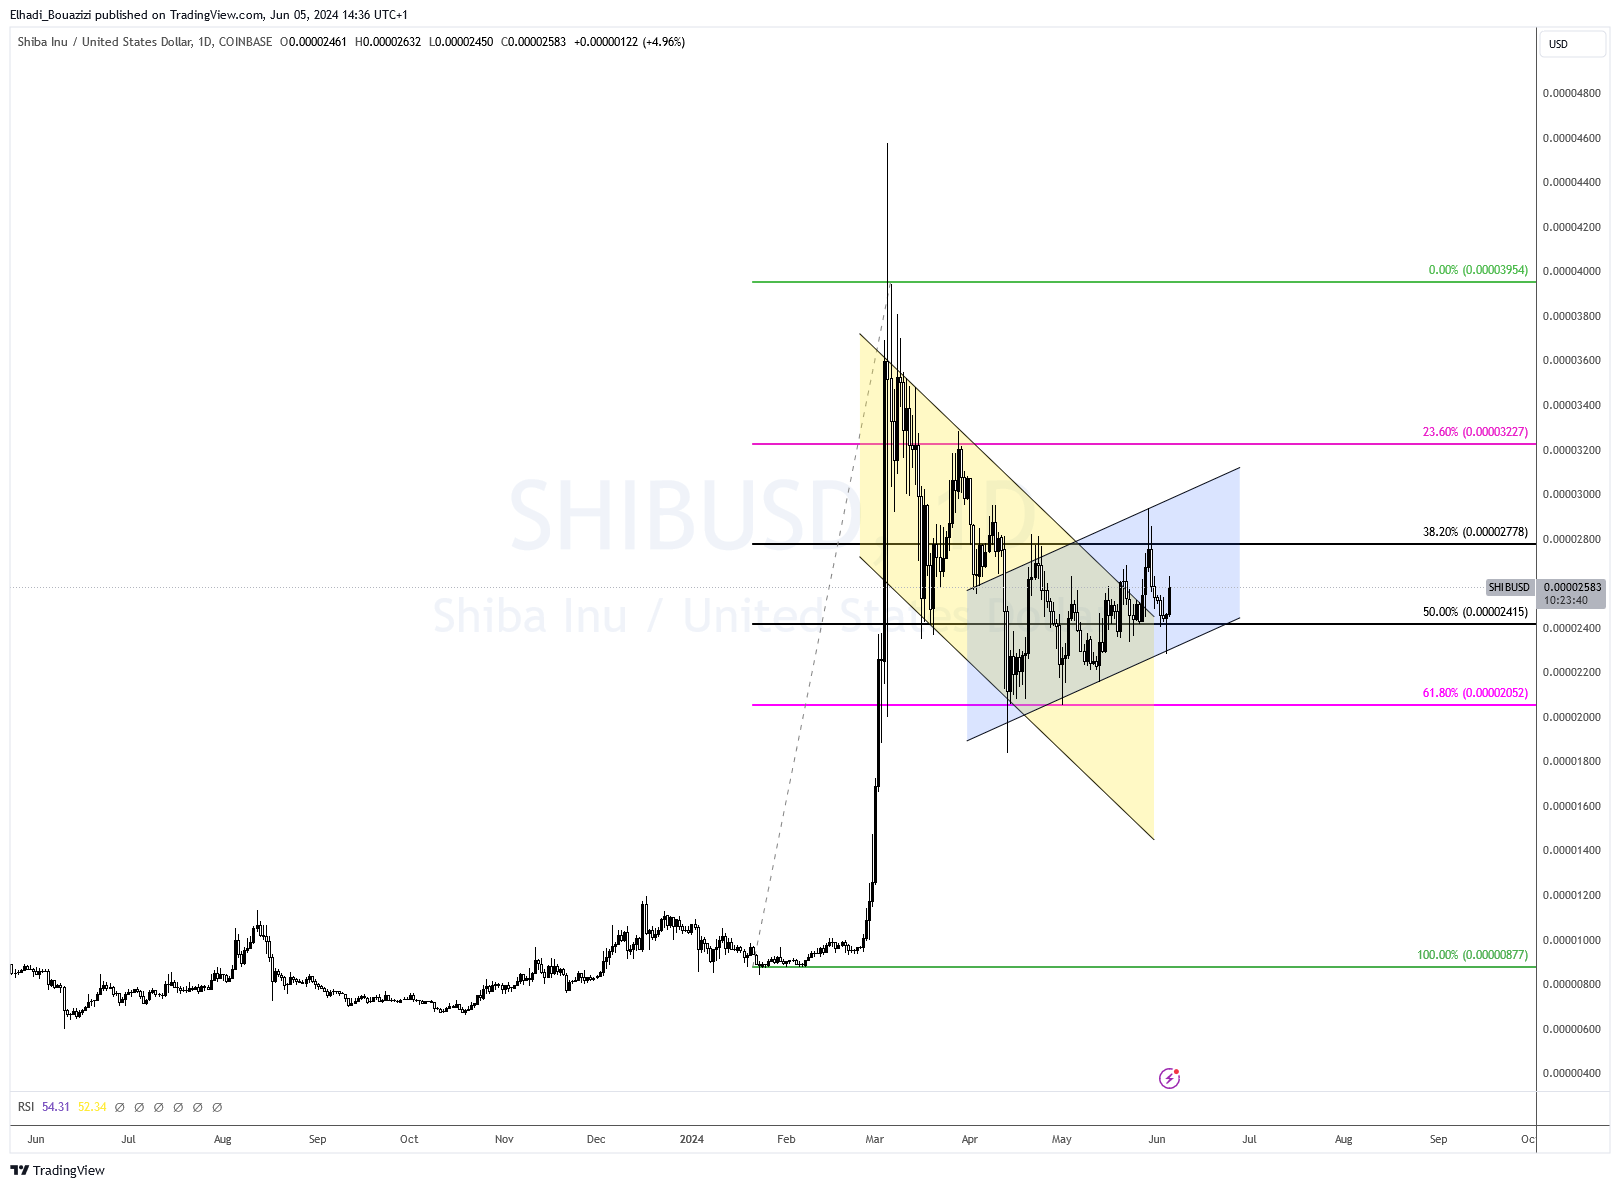 Shiba Inu SHIB Daily Price Chart